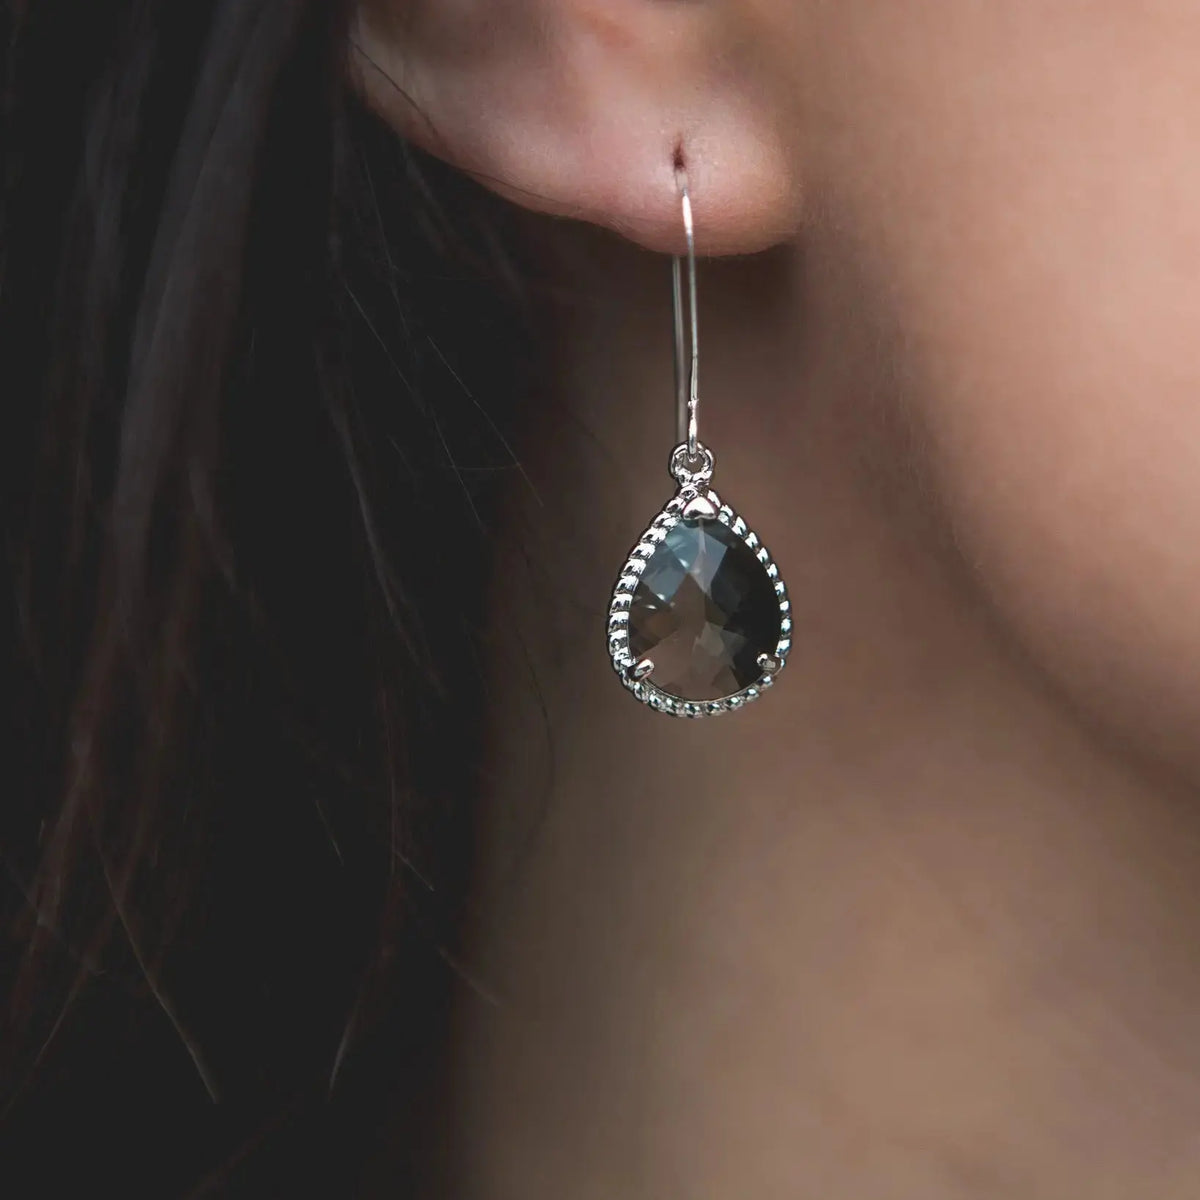 Dusk Exquisite Earrings - Mystic Soul Jewelry